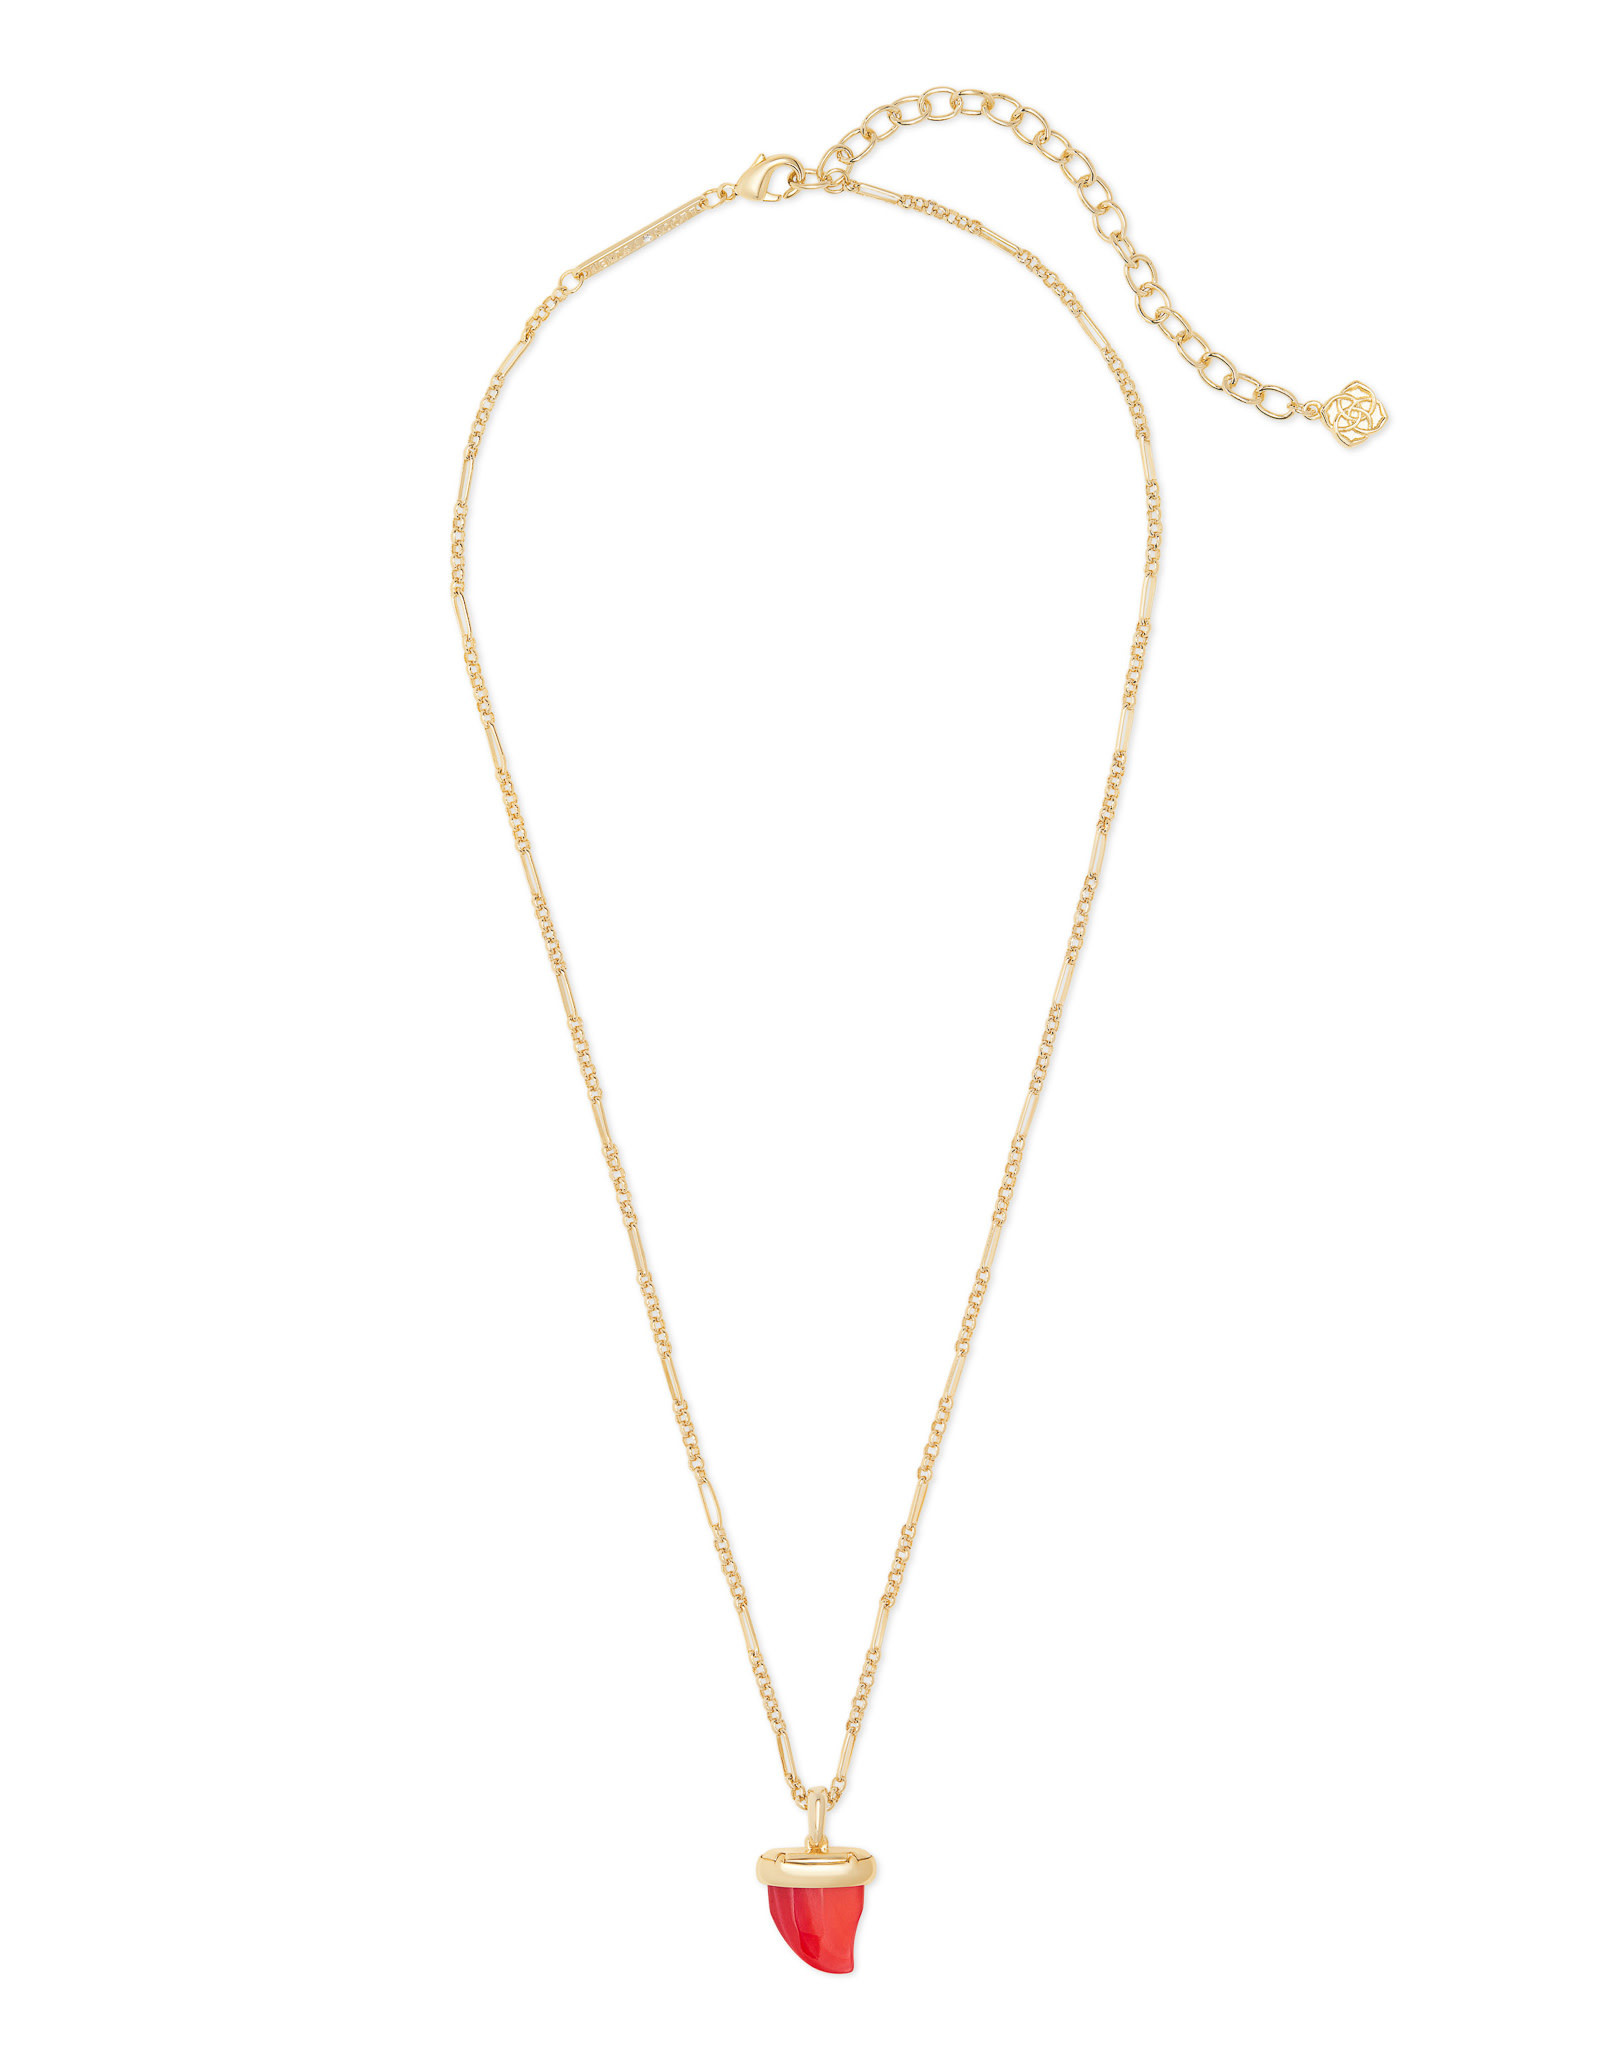 Kendra Scott Nola Gold Pendant Necklace in Red Illusion